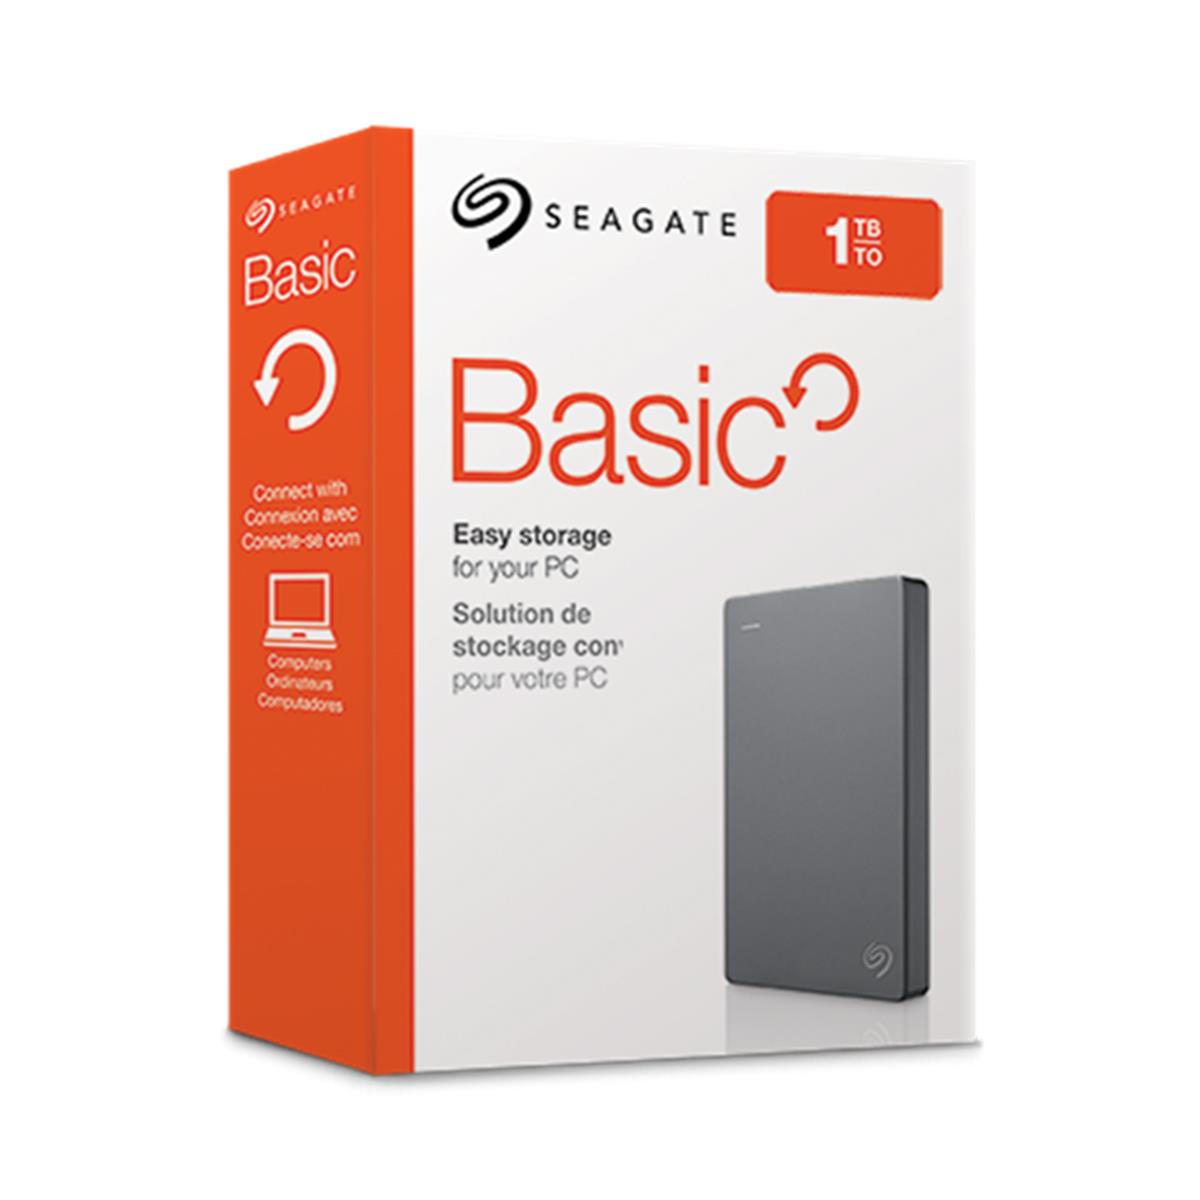 HD Externo Seagate Basic, 1TB, USB 3.0, Black